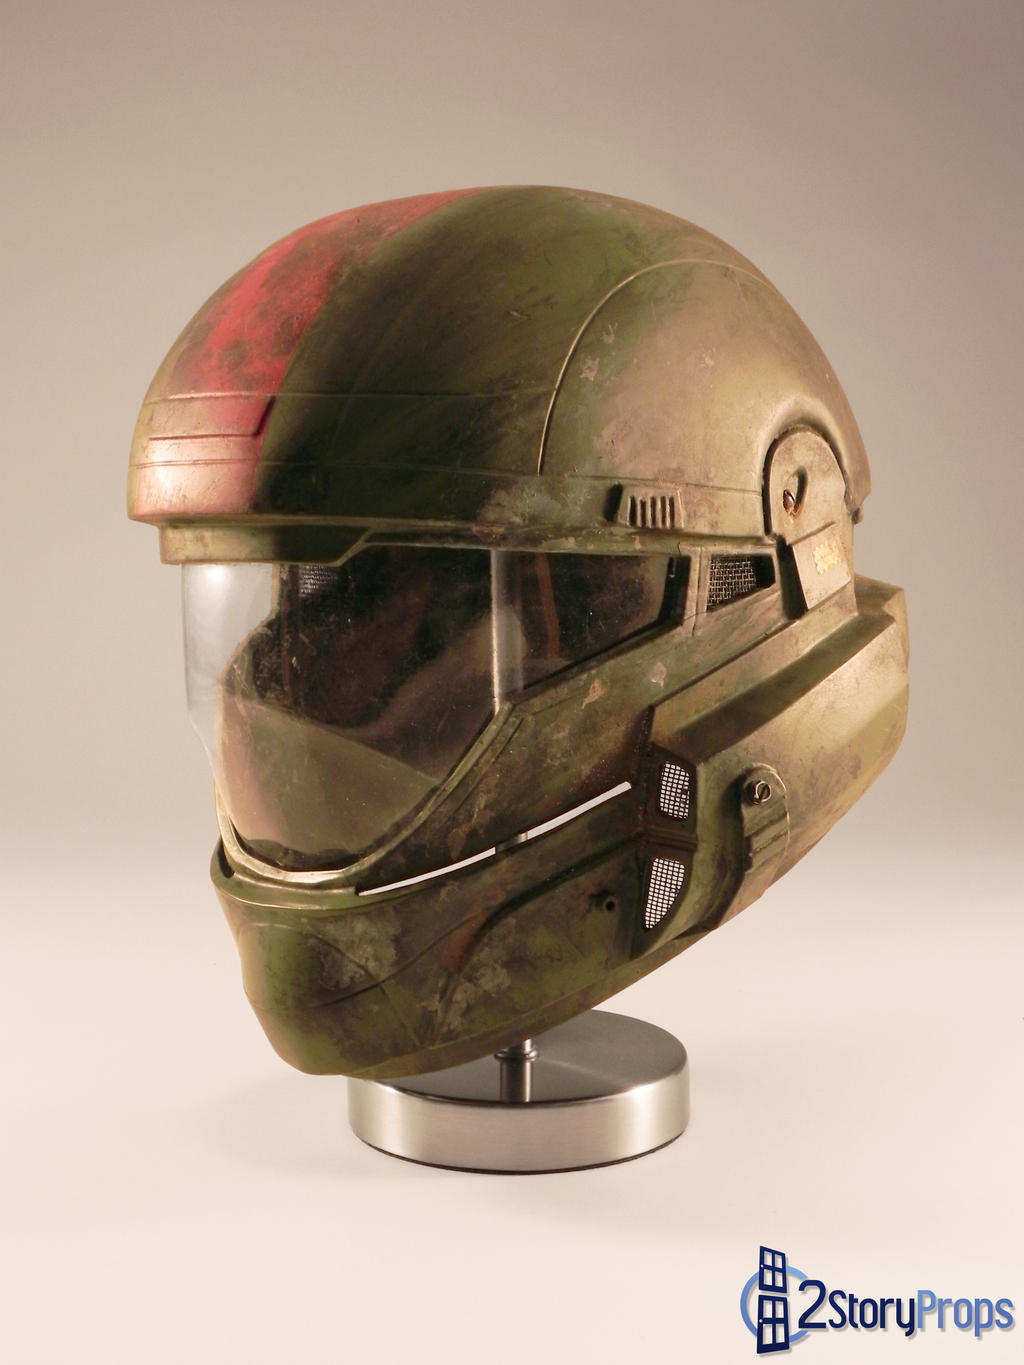 ODST Helmet by DoubleZeroFX on DeviantArt